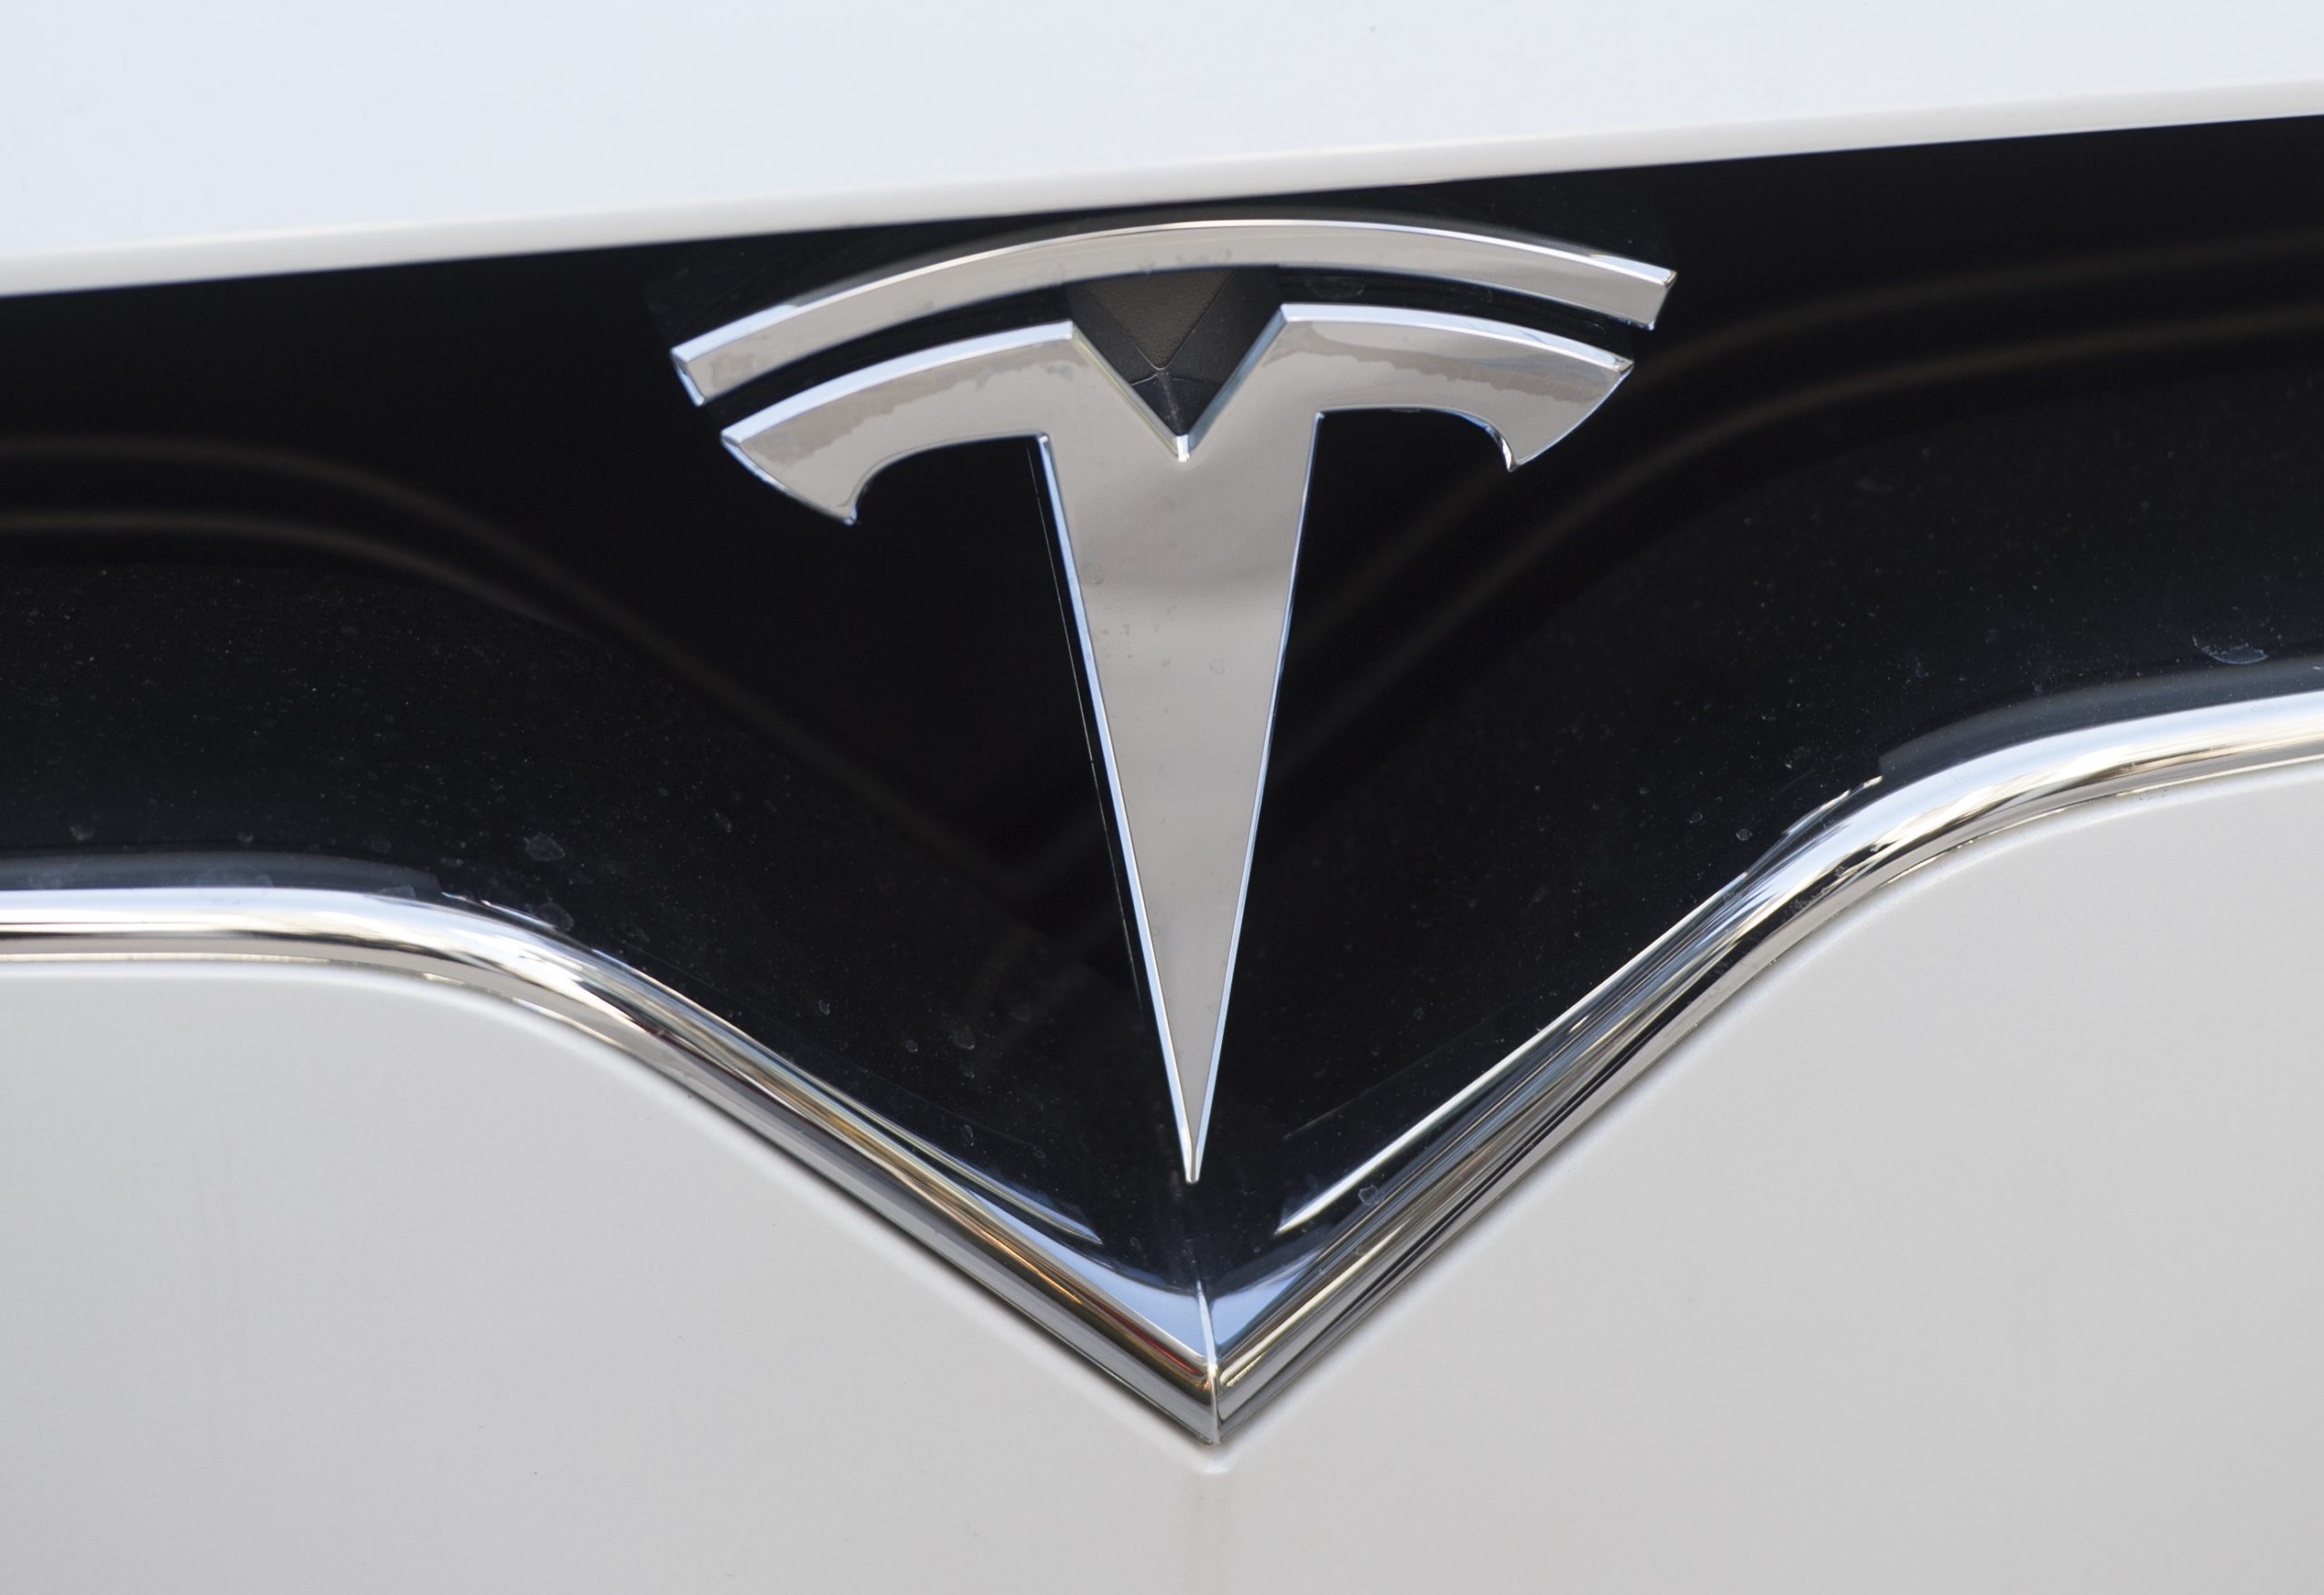 Tesla owes its profit figures to selling emission rights